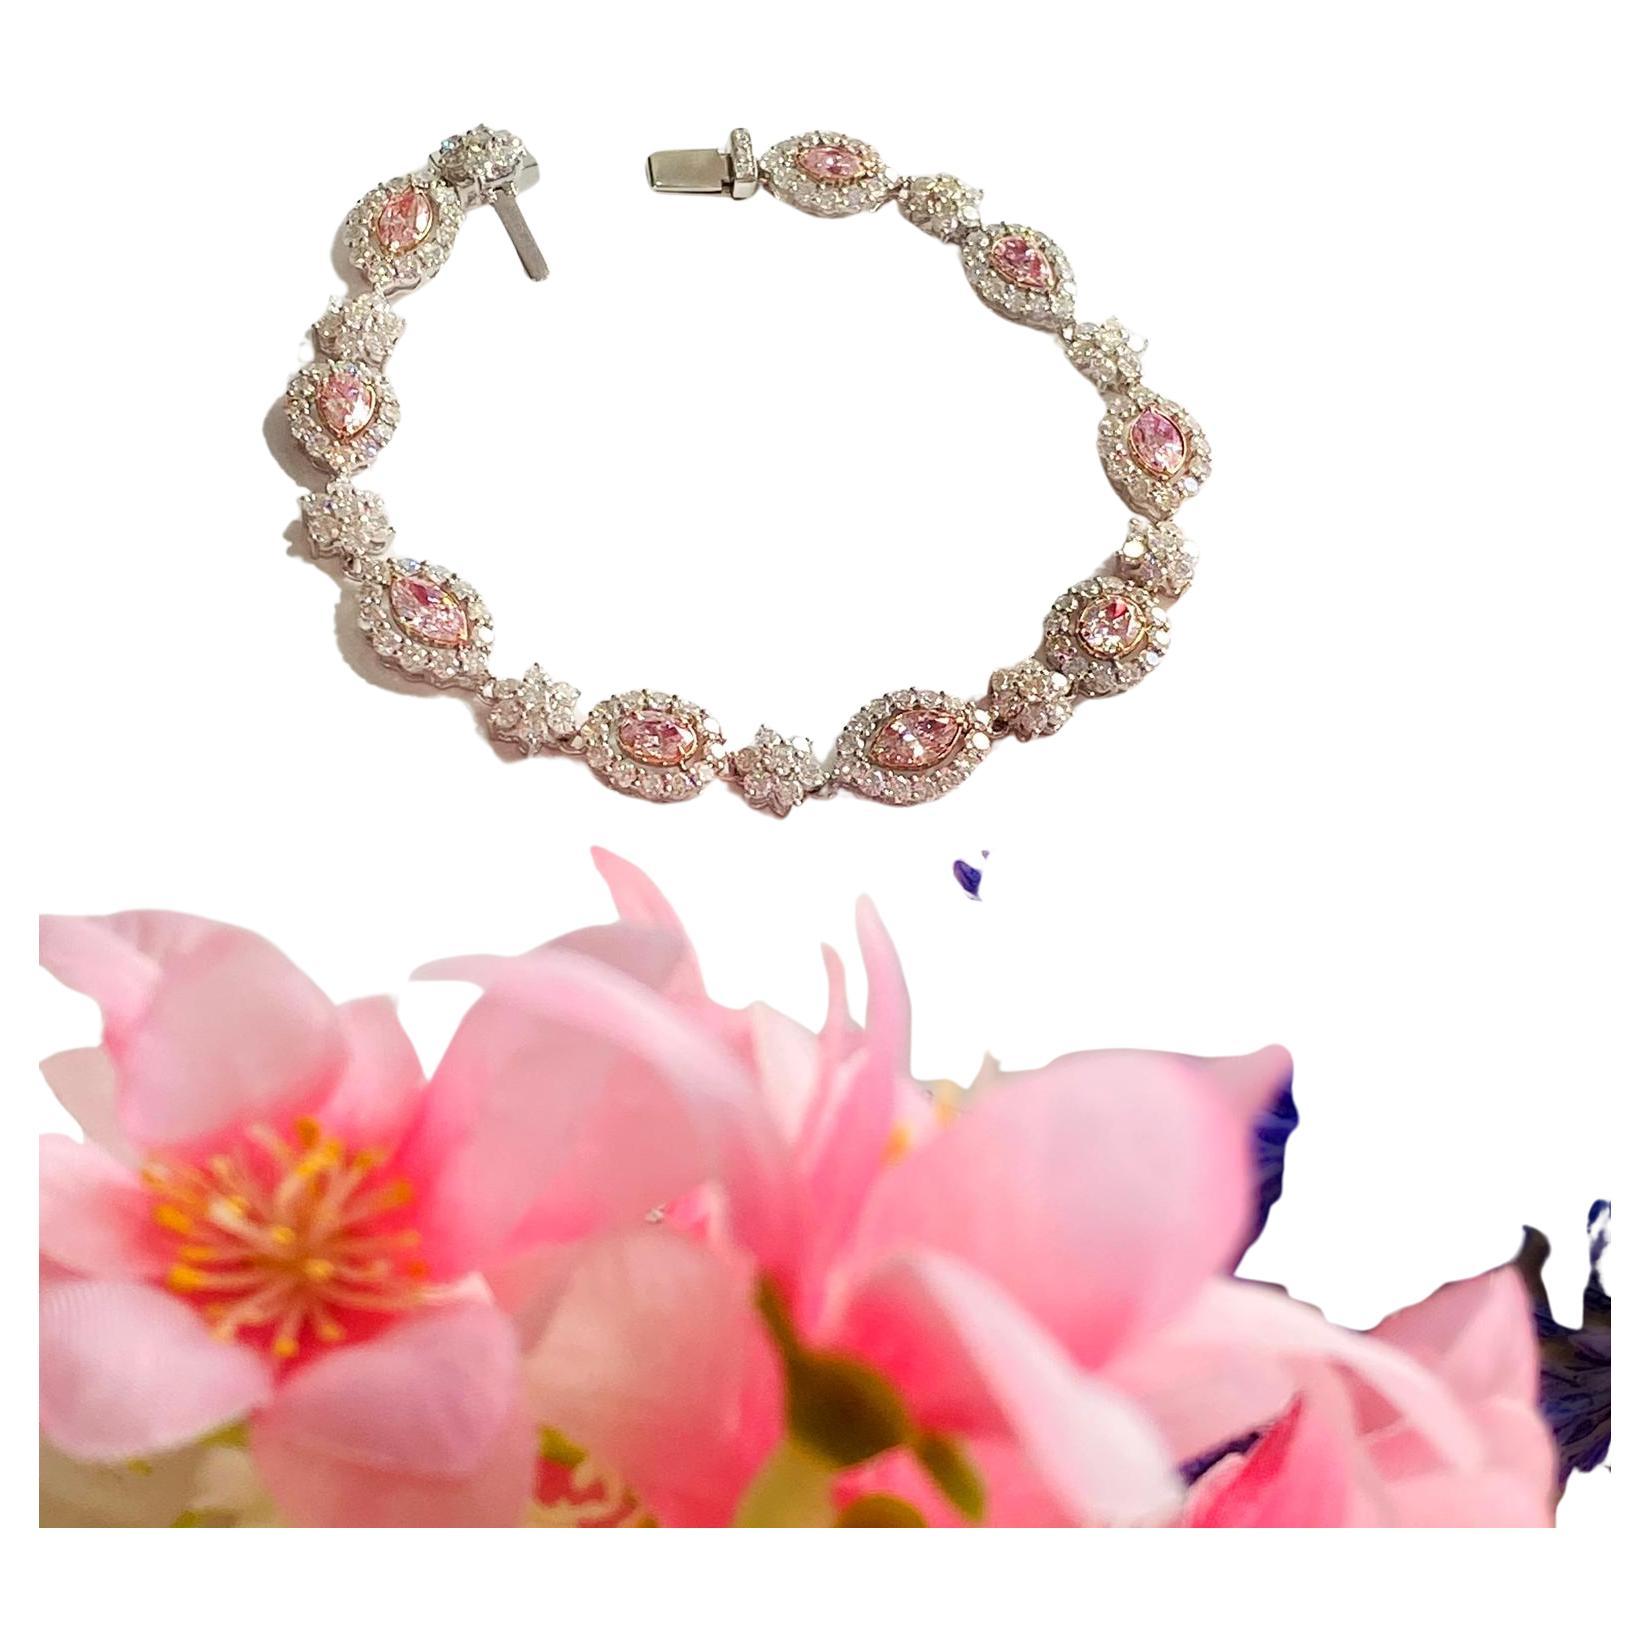 3.04 Carat Very Light Pink Diamond Bracelet GIA Certified For Sale